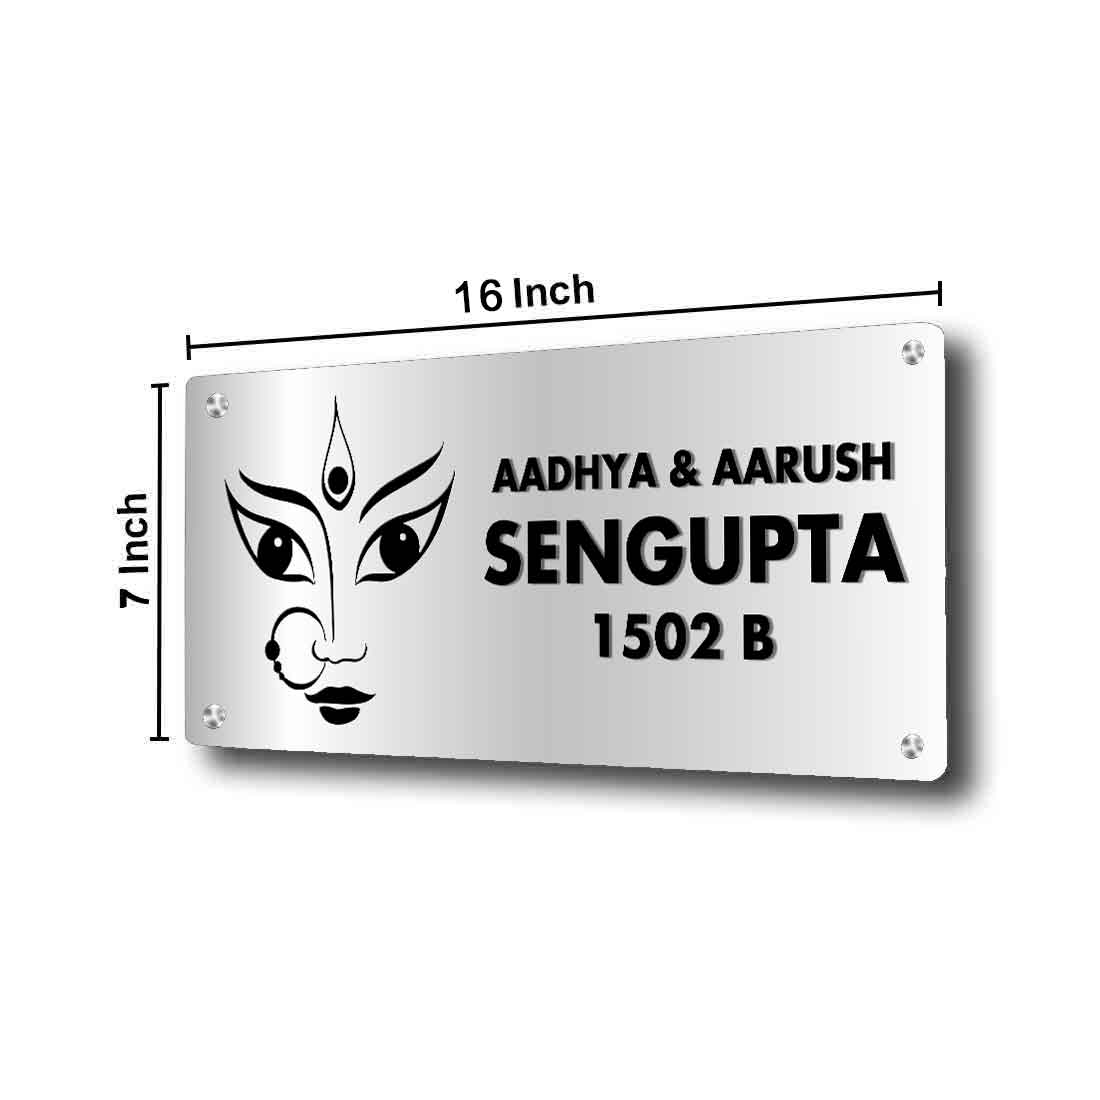 Durga Name Plate for Home Entrance